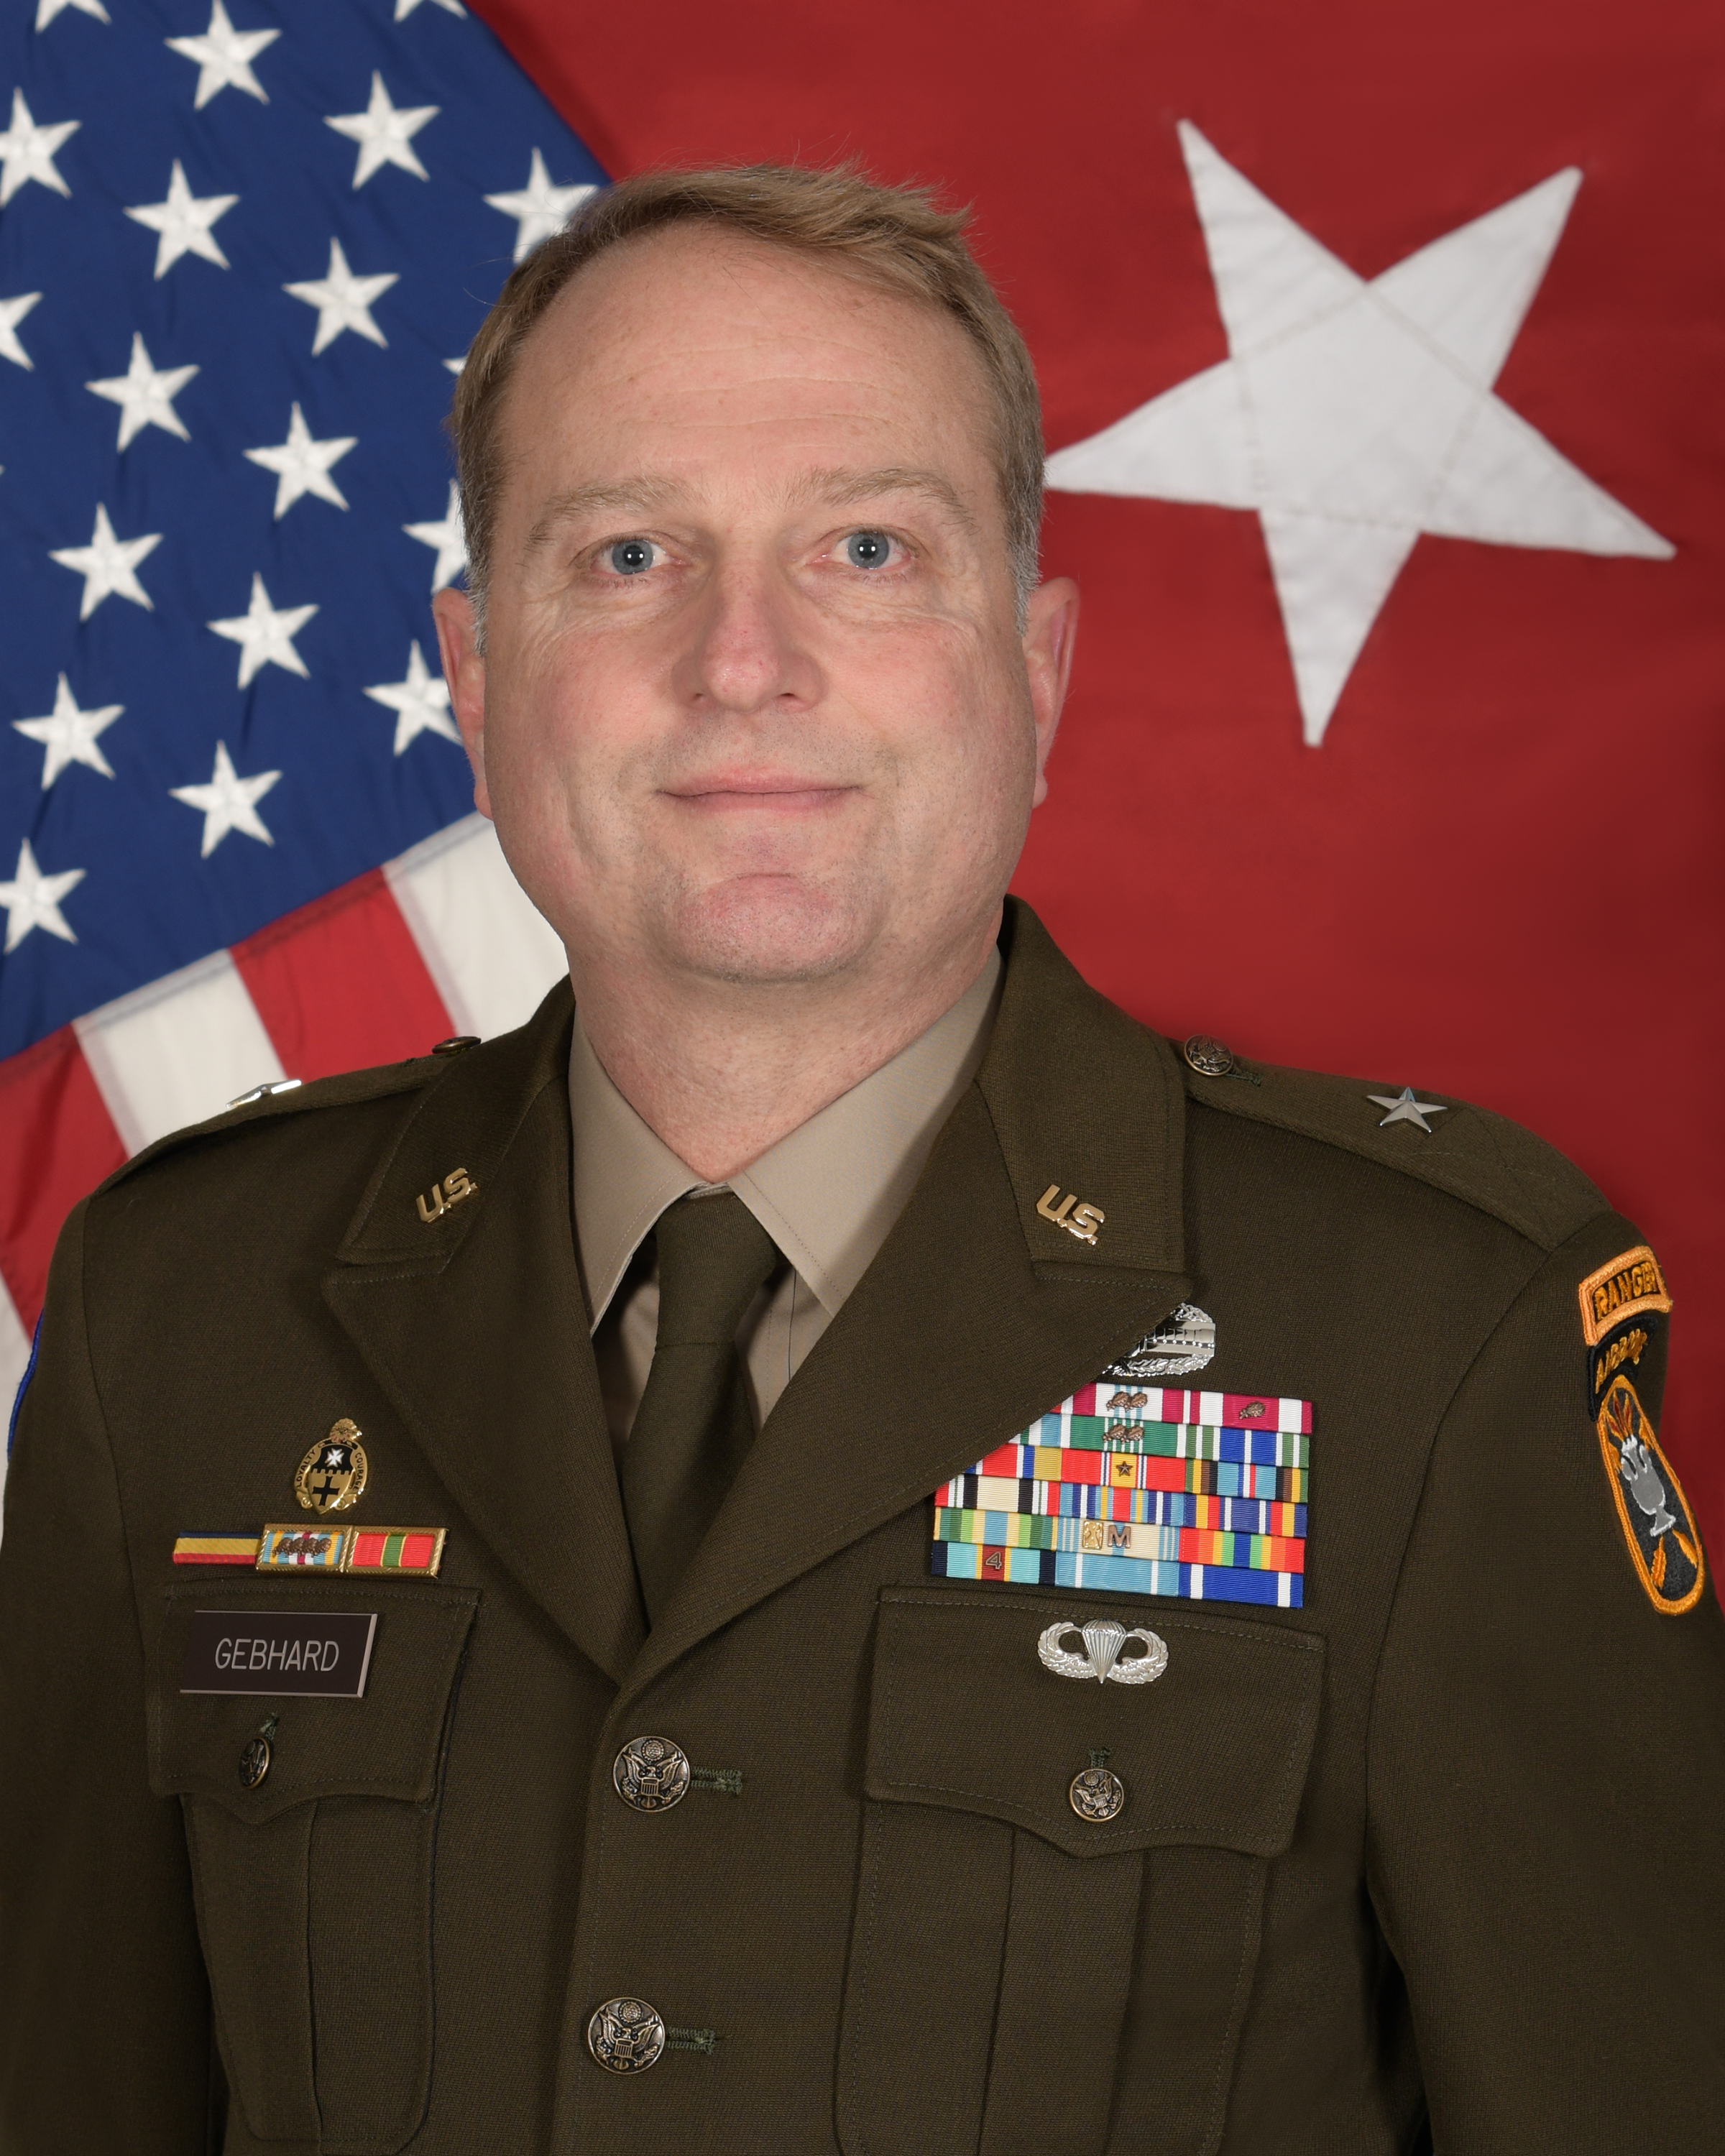 Brigadier General Matthew Gebhard Deputy Commanding General - Operations